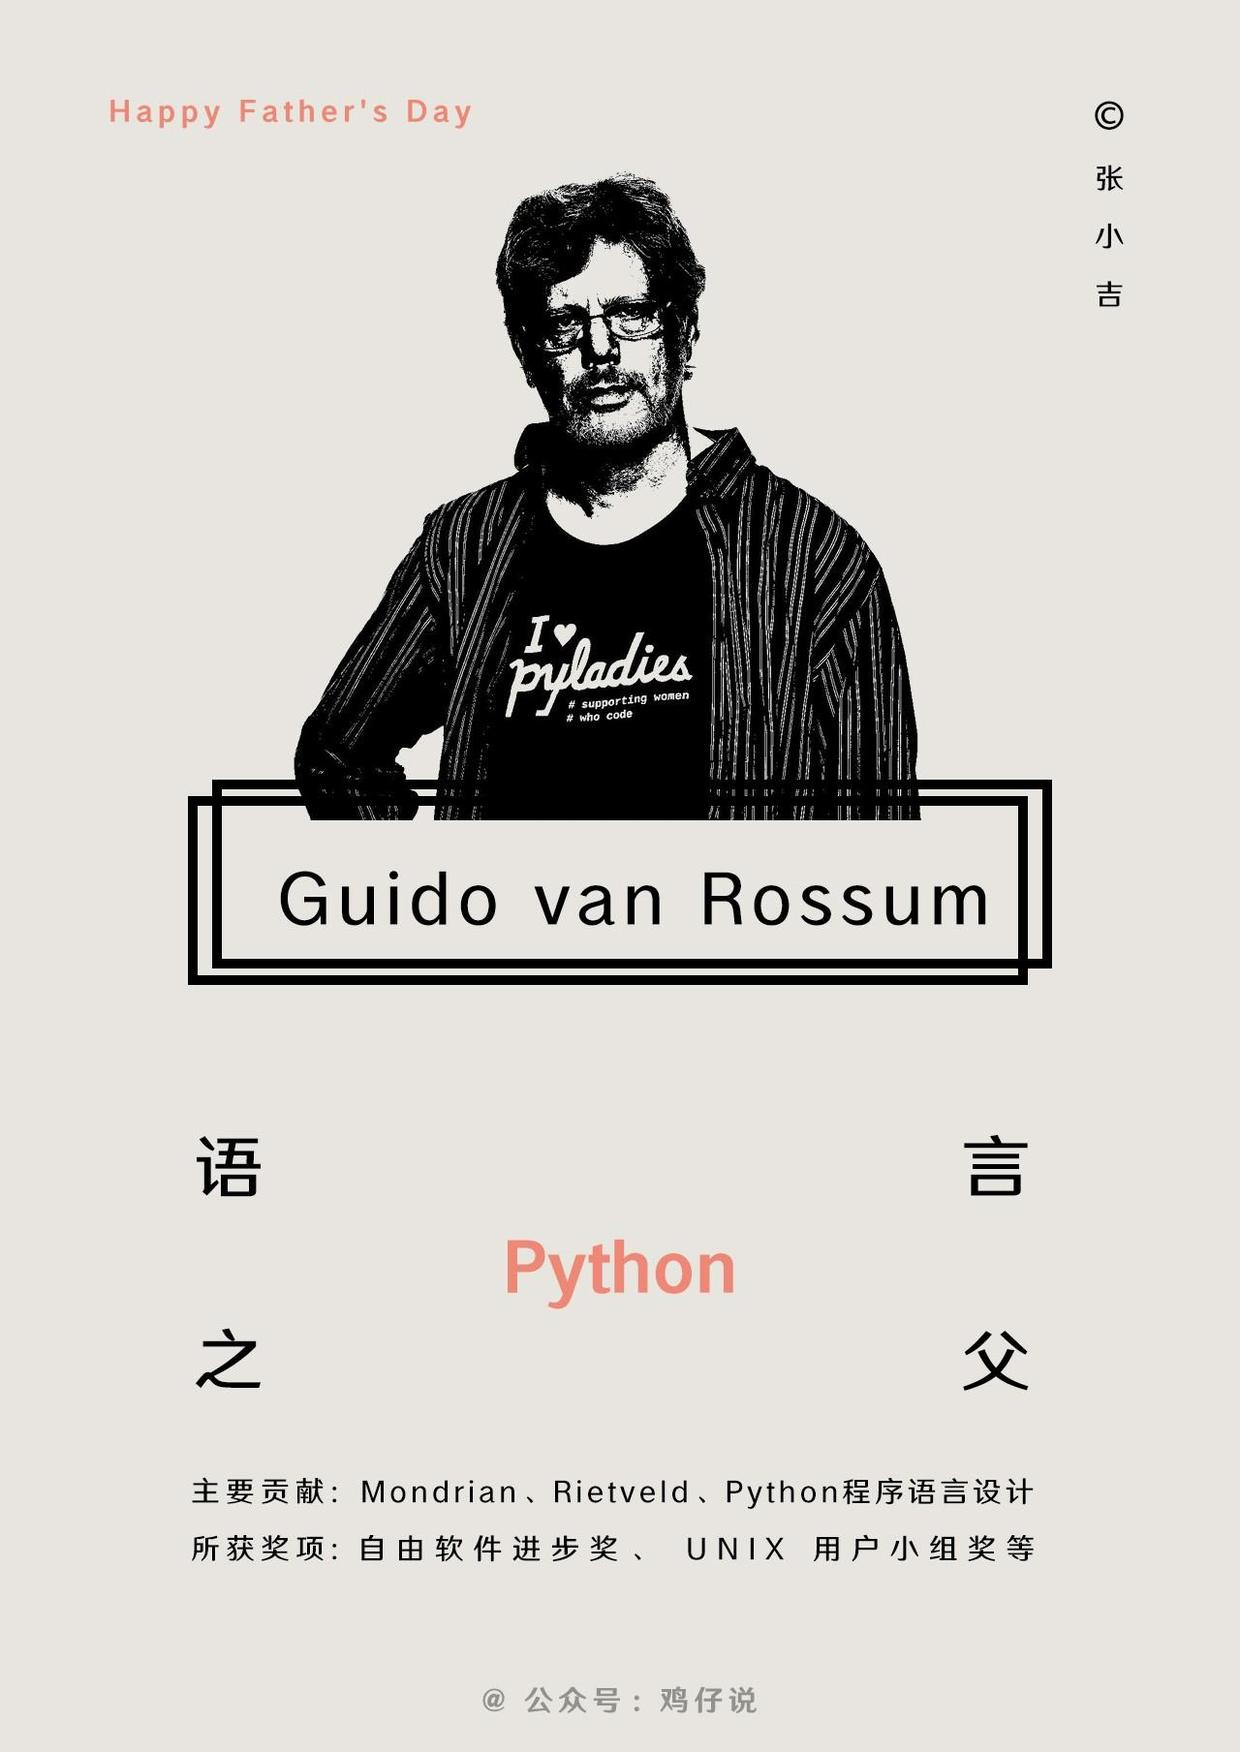 Python 编程语言之父